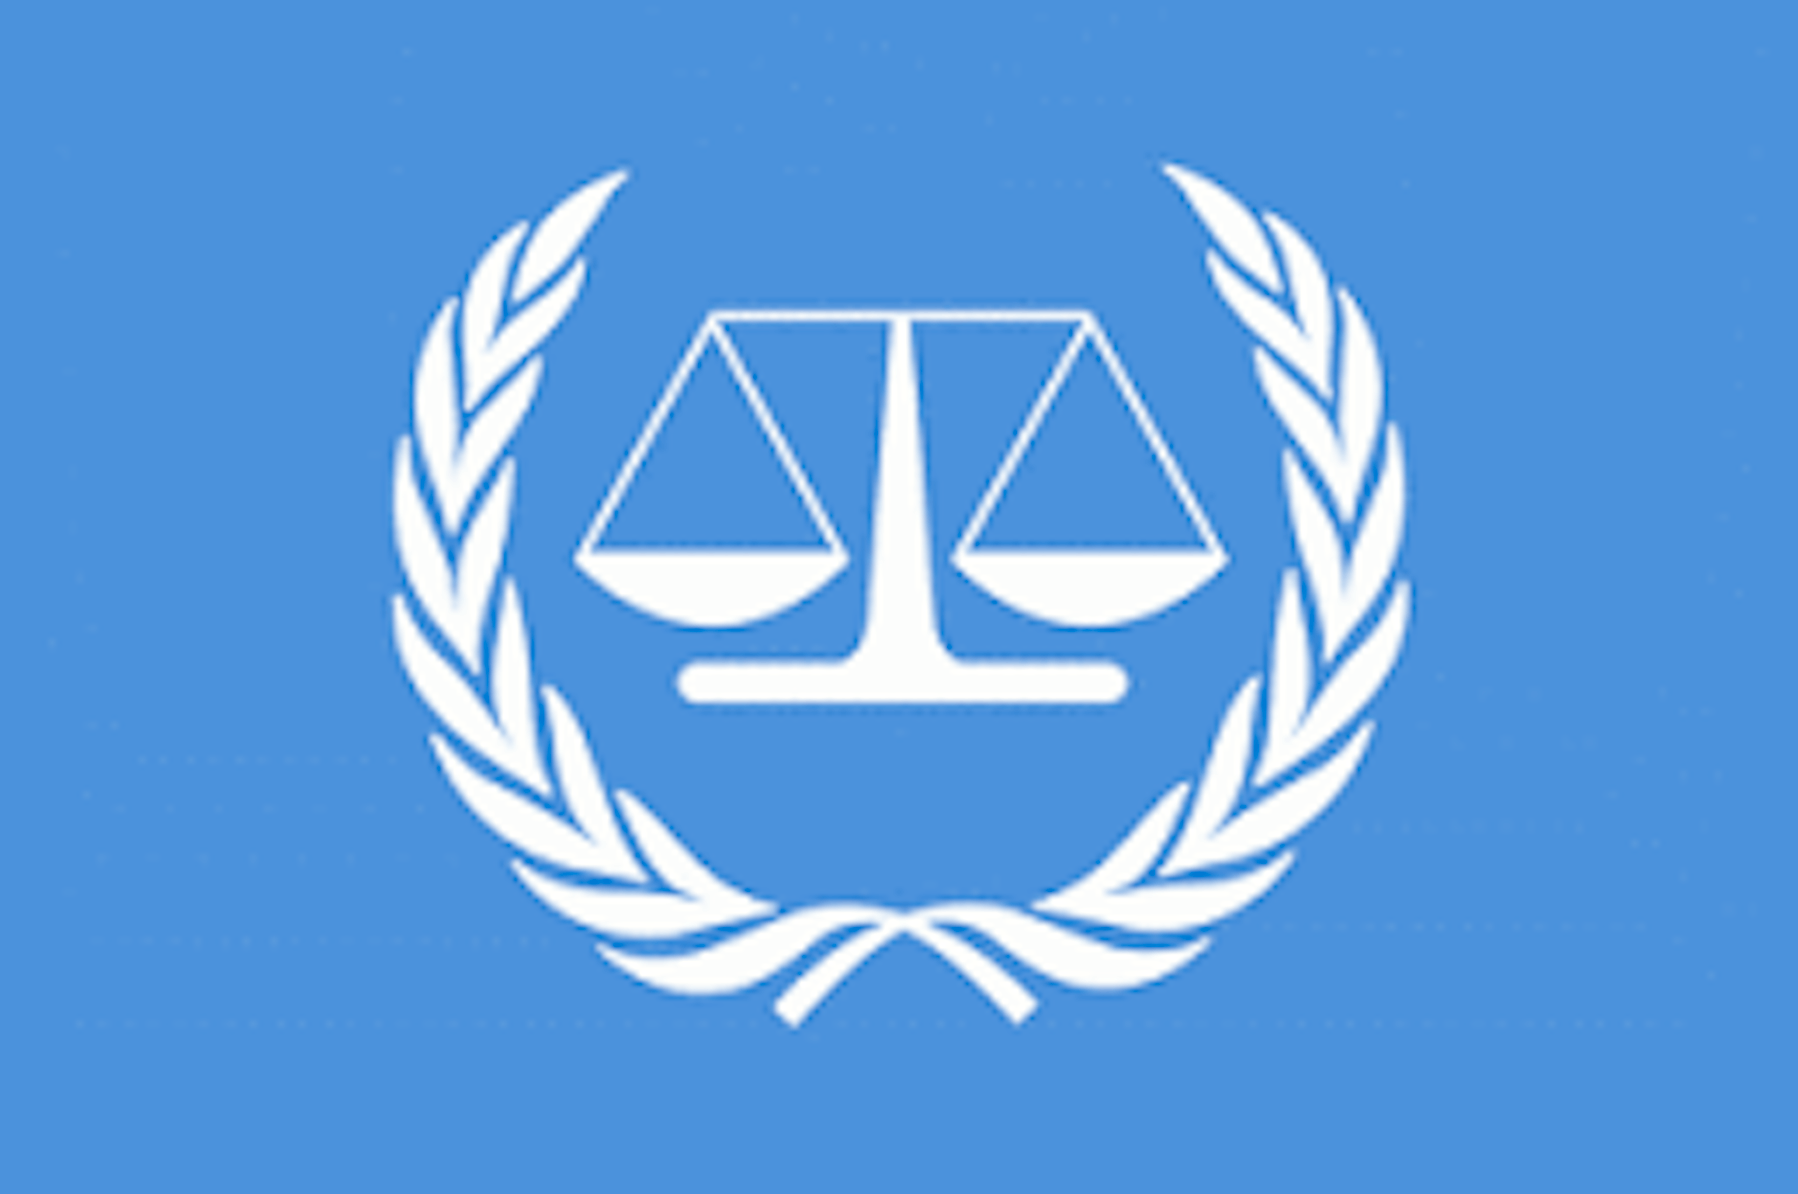 Право флага судна. Римский статут международного уголовного суда. Международный Уголовный трибунал (Гаага). Международный суд ООН статут. МУС Международный Уголовный суд.